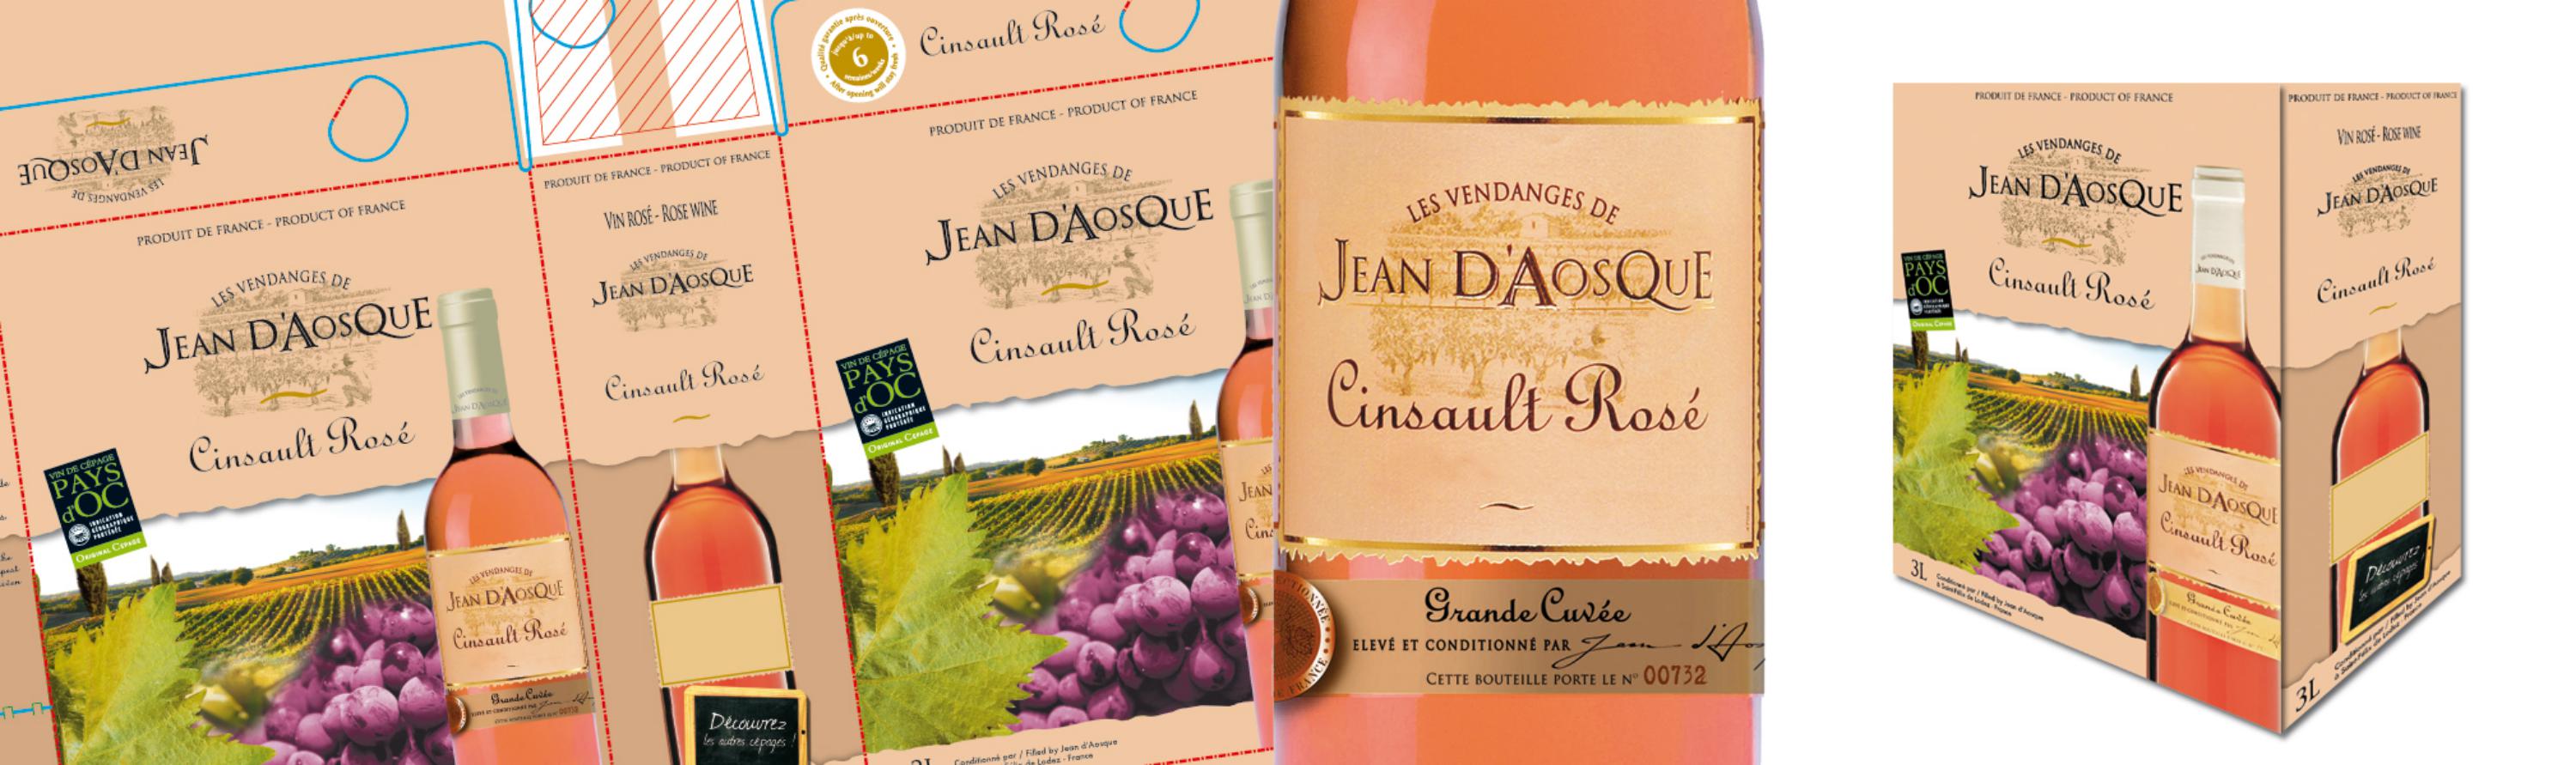 Bag-in-box Jean d'Aosque Cinsault rosé